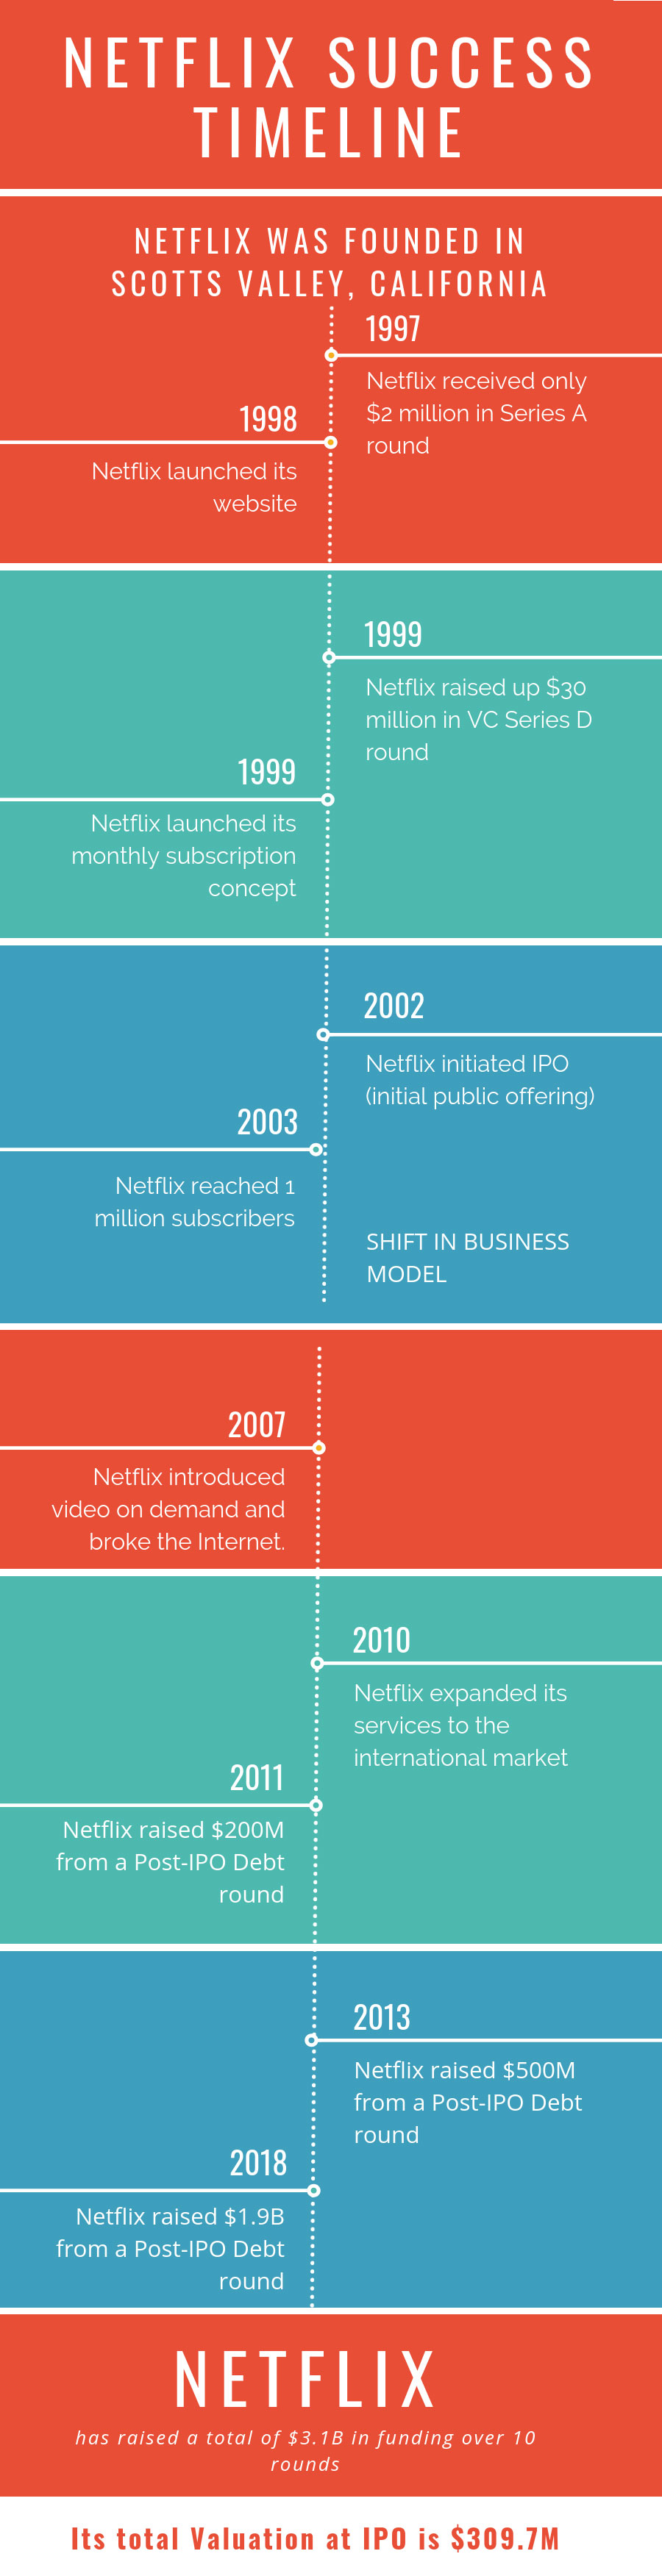 Netflix Success Timeline